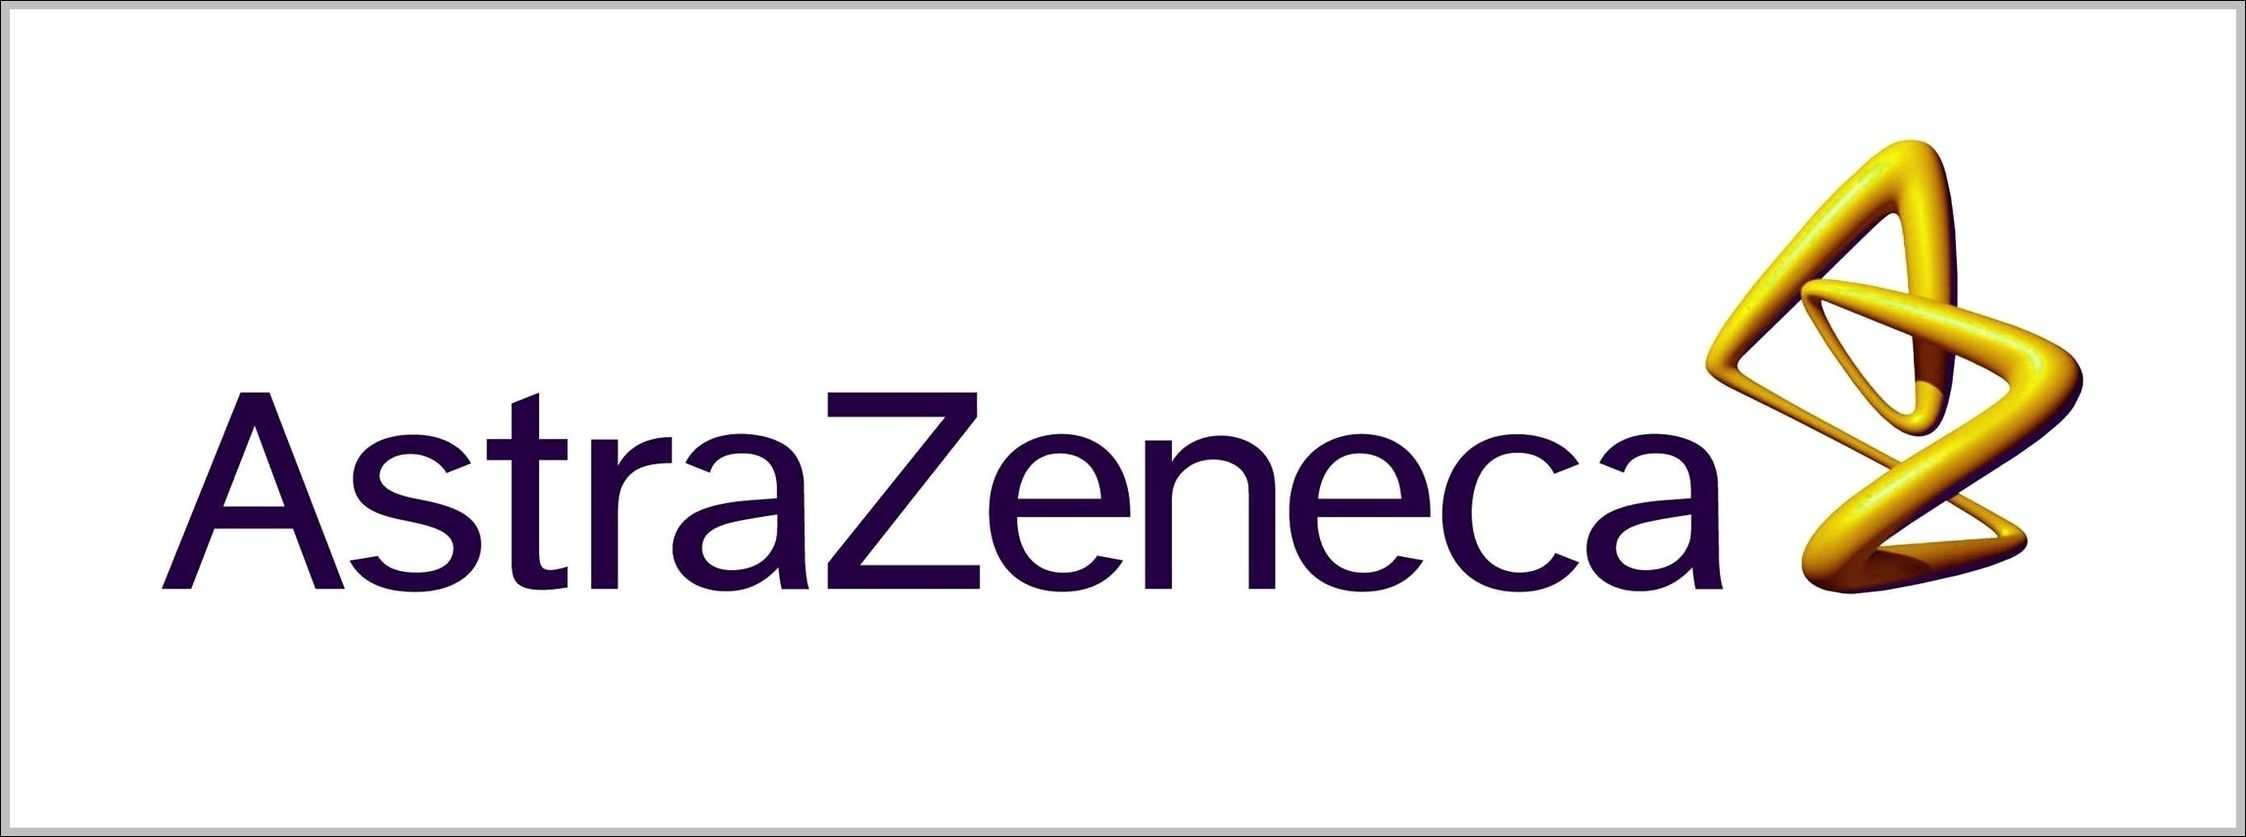 AstraZeneca logo 3D